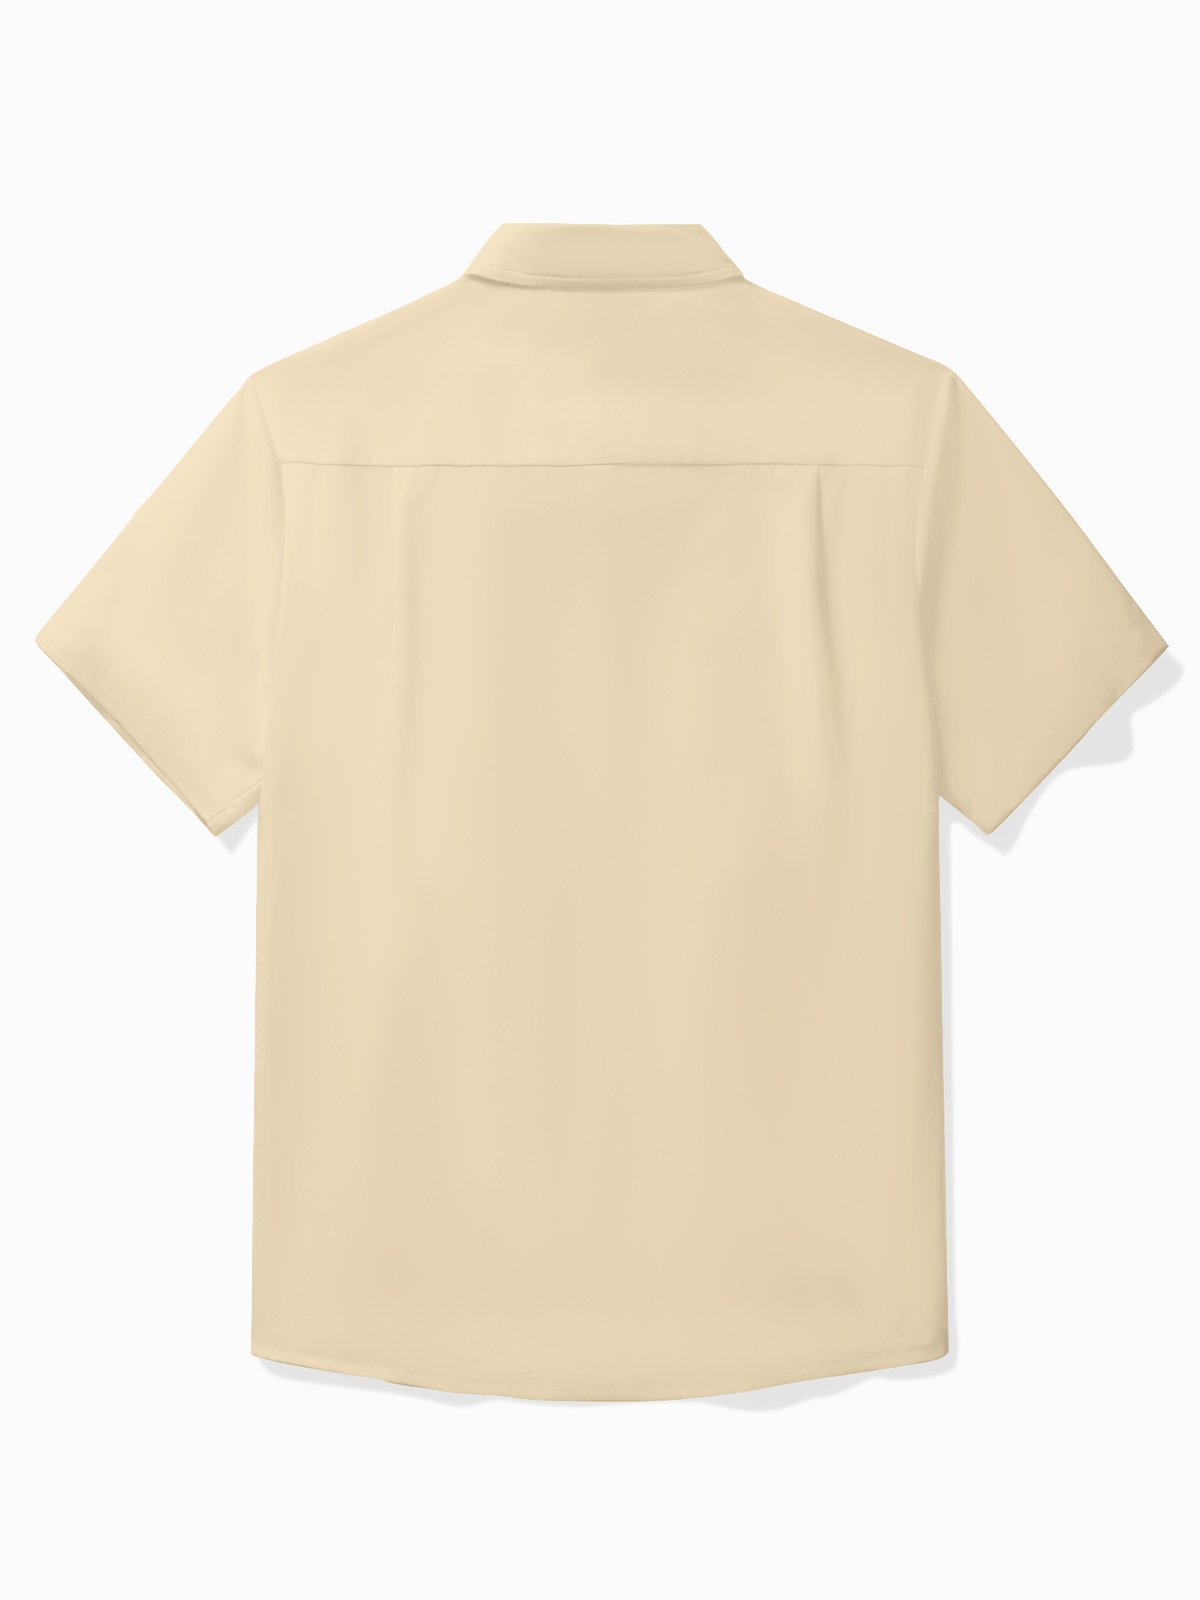 Royaura® Vintage Bowling Pinstripe Printed Chest Pocket Shirt Plus Size Men's Shirt Big Tall